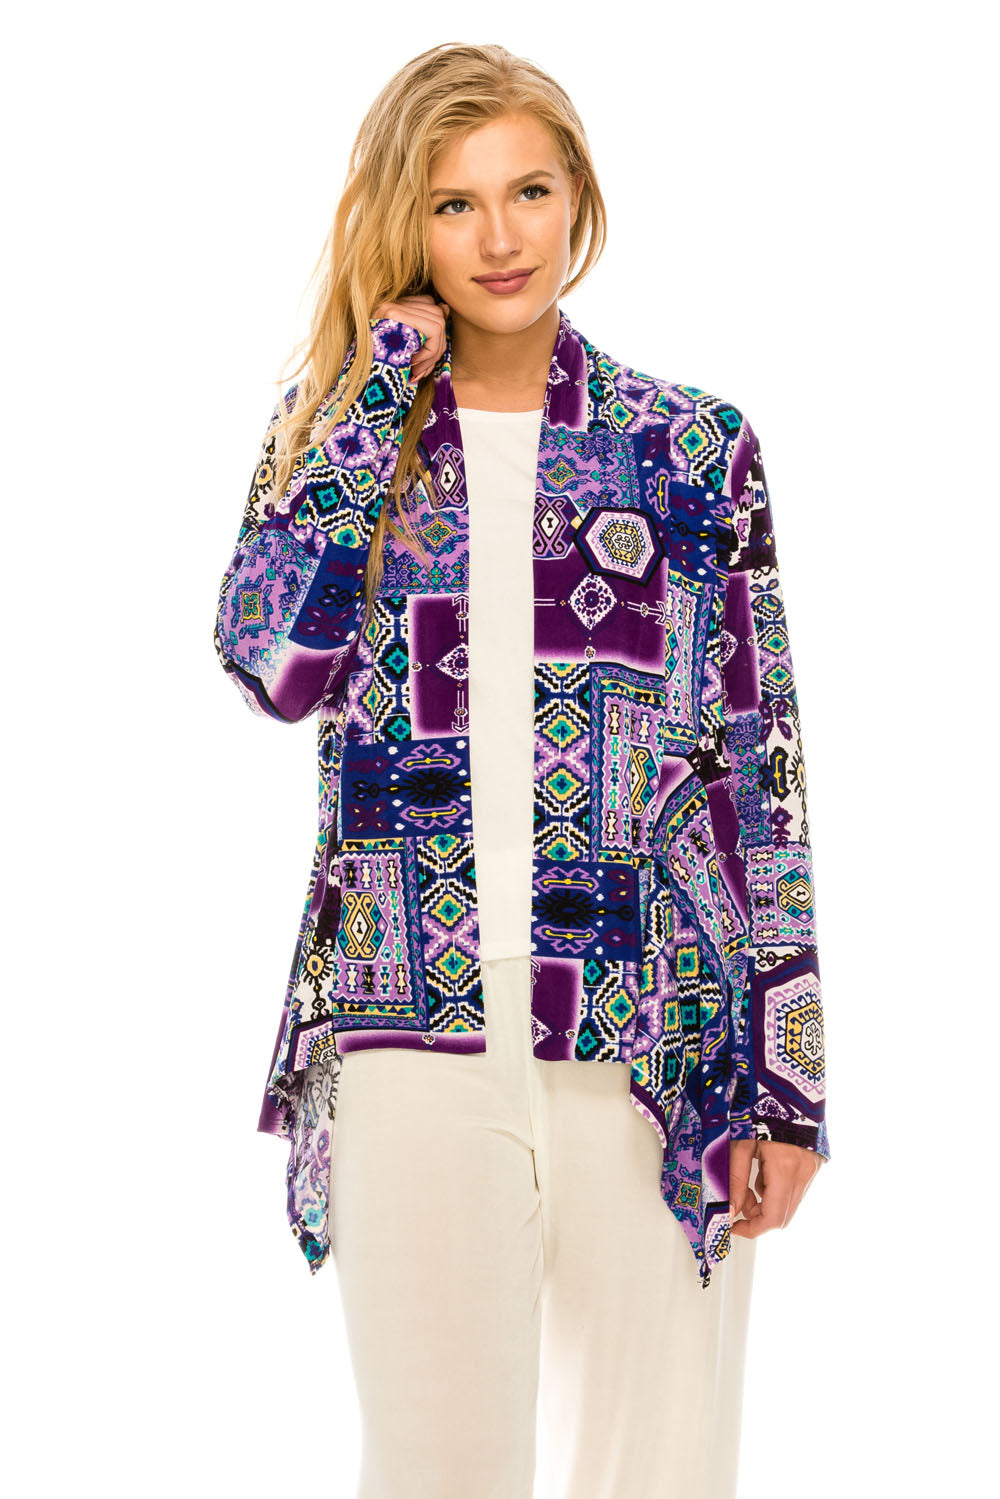 Jostar Women's Stretchy Print Mid Cut Jacket Long Sleeve Print Plus, 428BN-LXP-W166 - Jostar Online